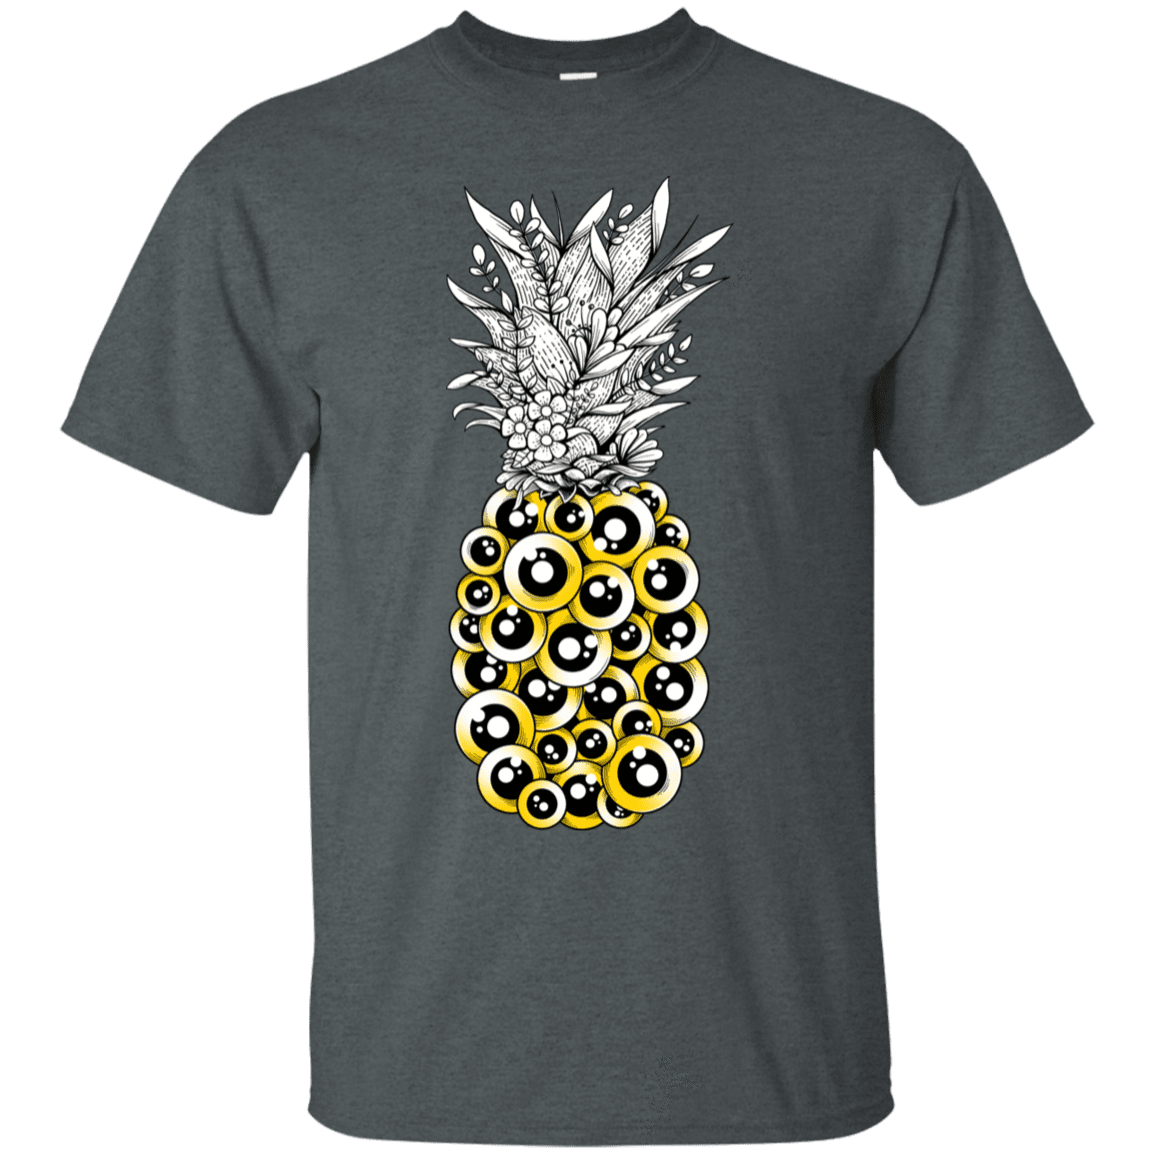 T-Shirts Dark Heather / S Tropical Illusion T-Shirt